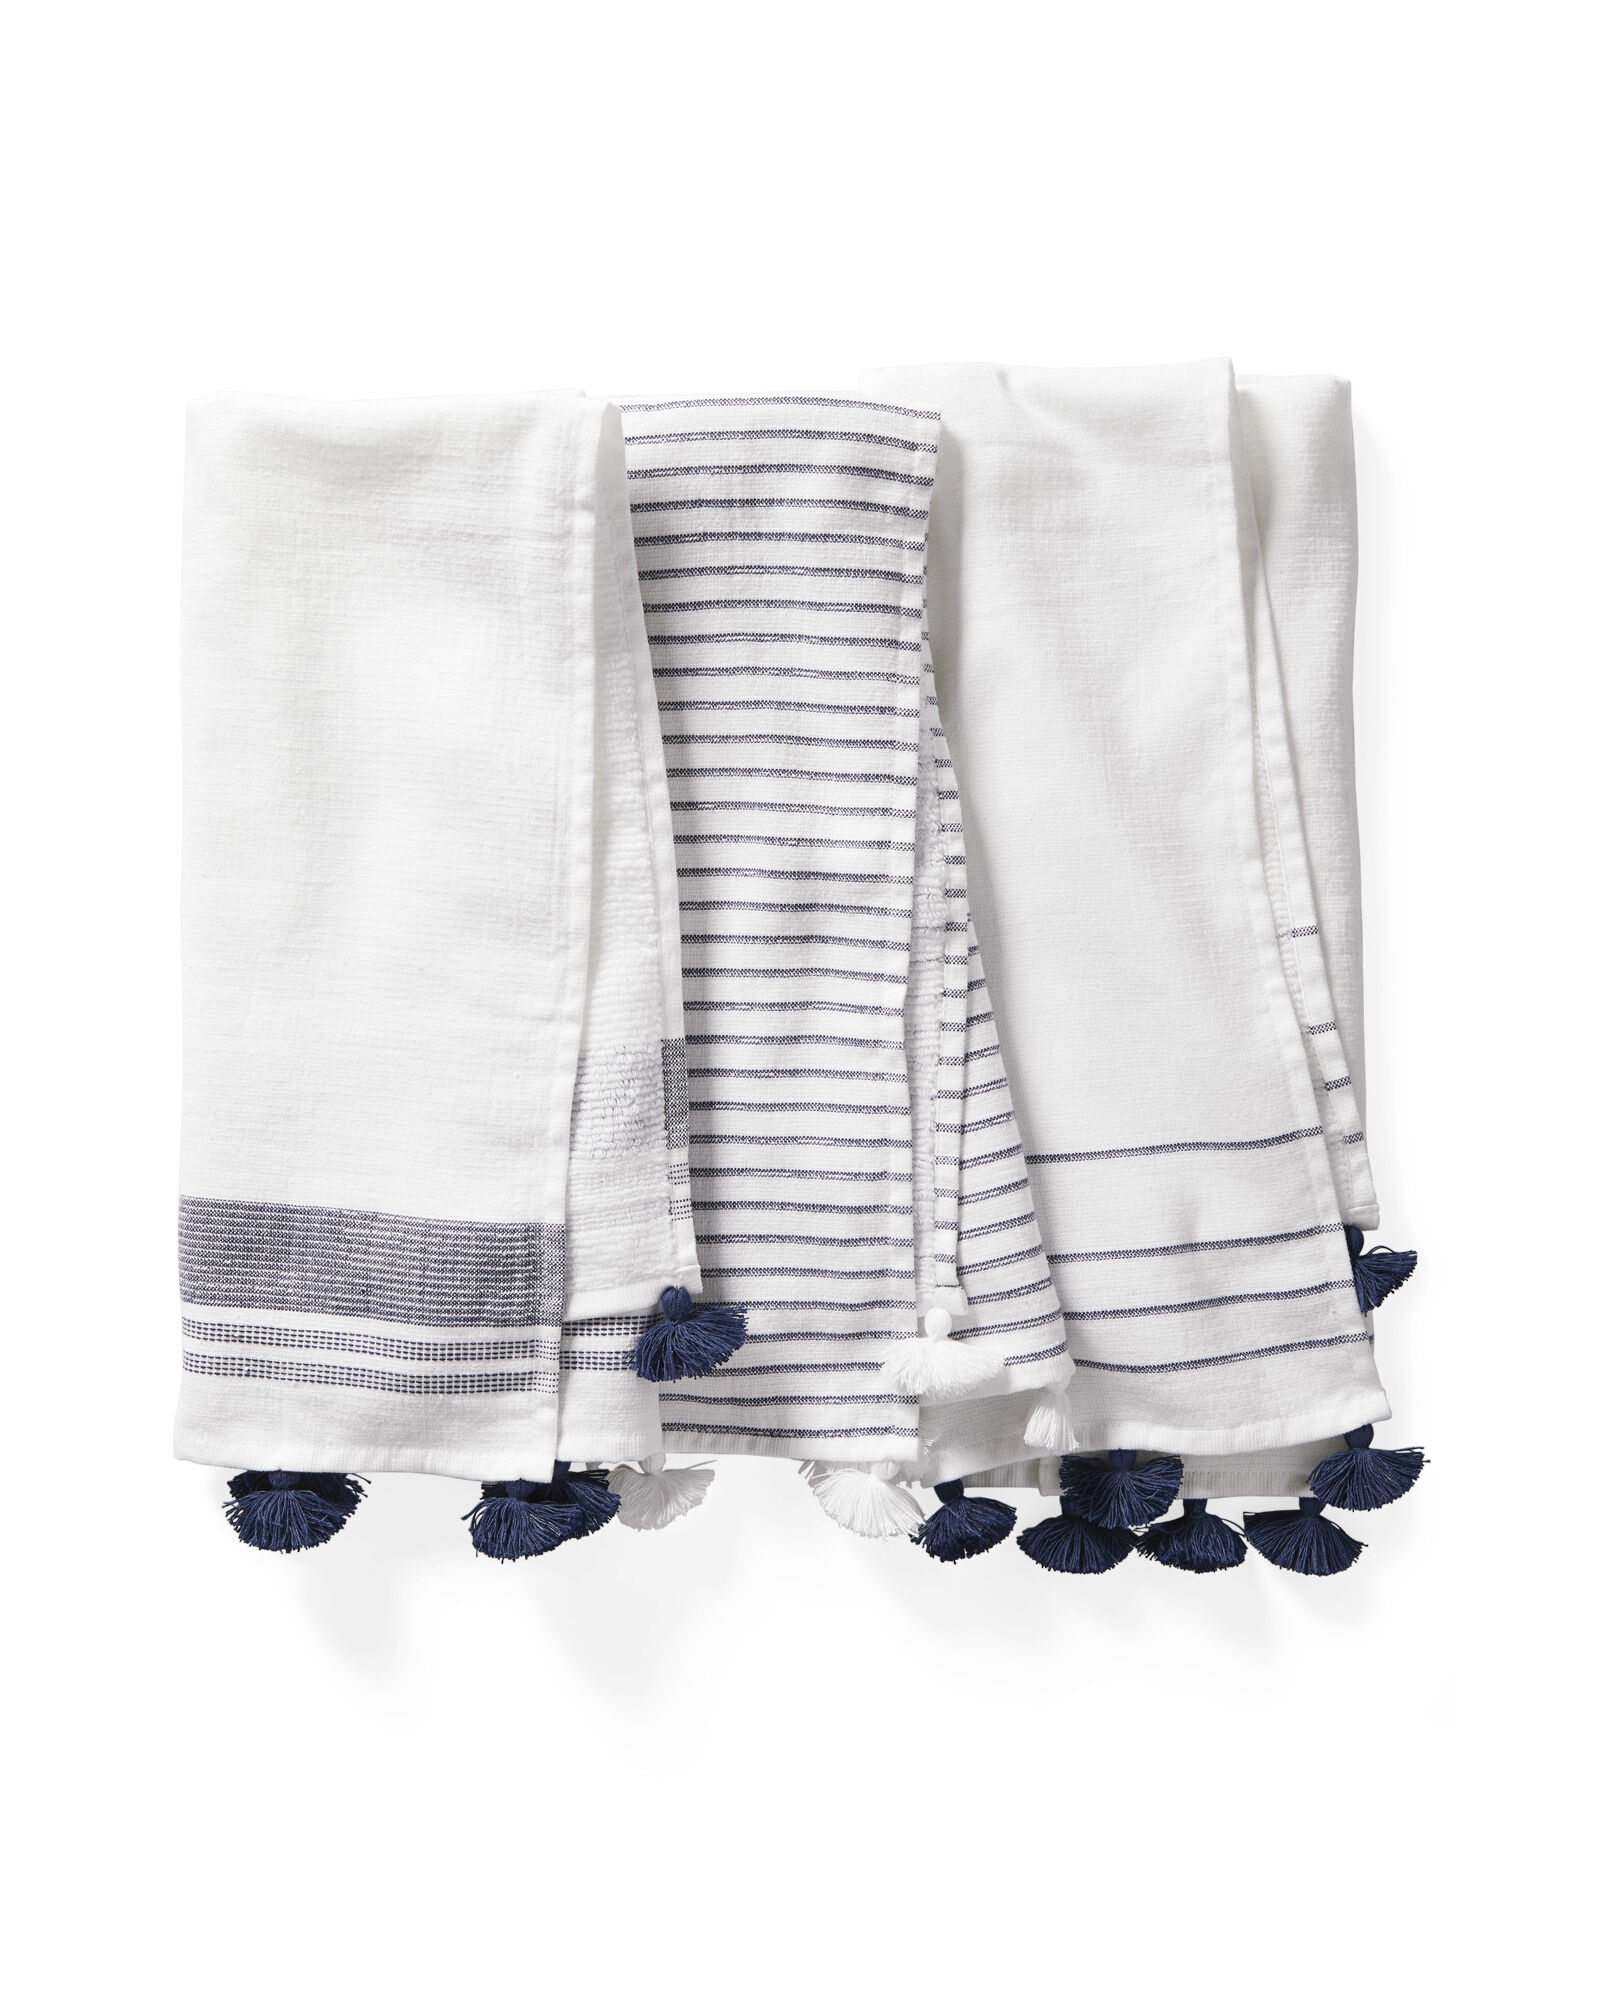 Bellport Guest Towels (Set of 3) - Image 0